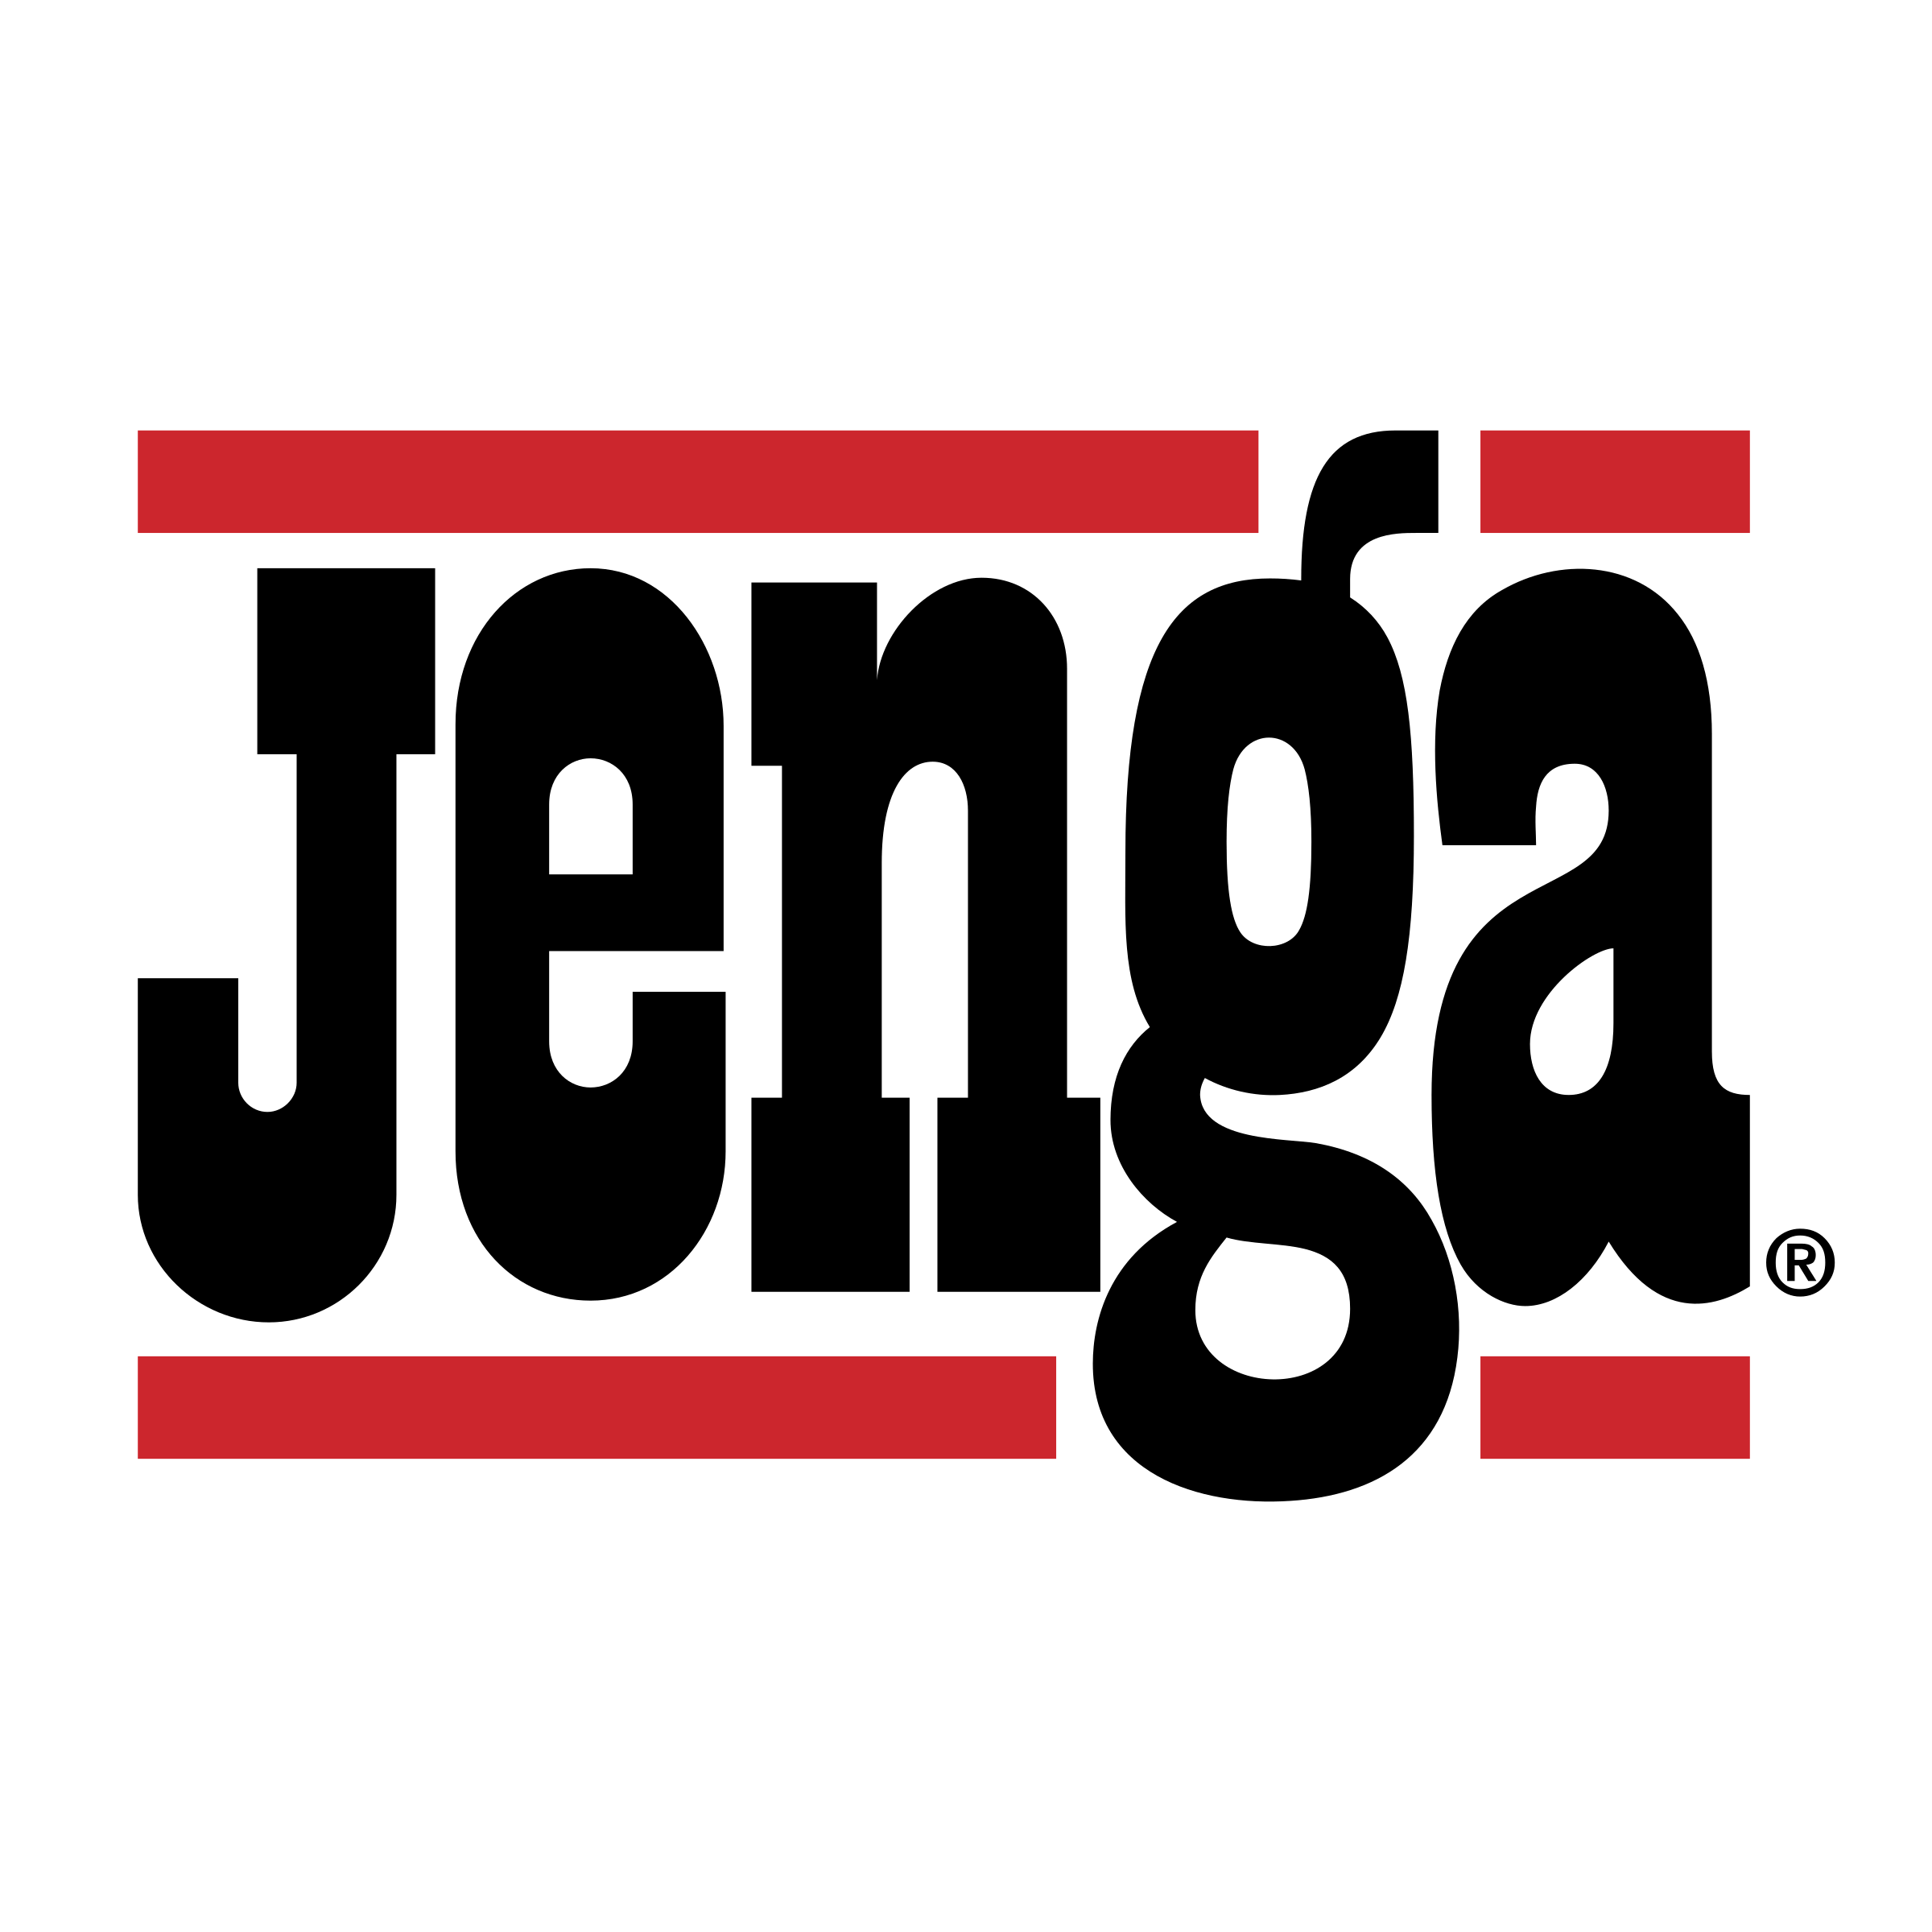 Jenga Logo - Jenga Logo PNG Transparent & SVG Vector - Freebie Supply